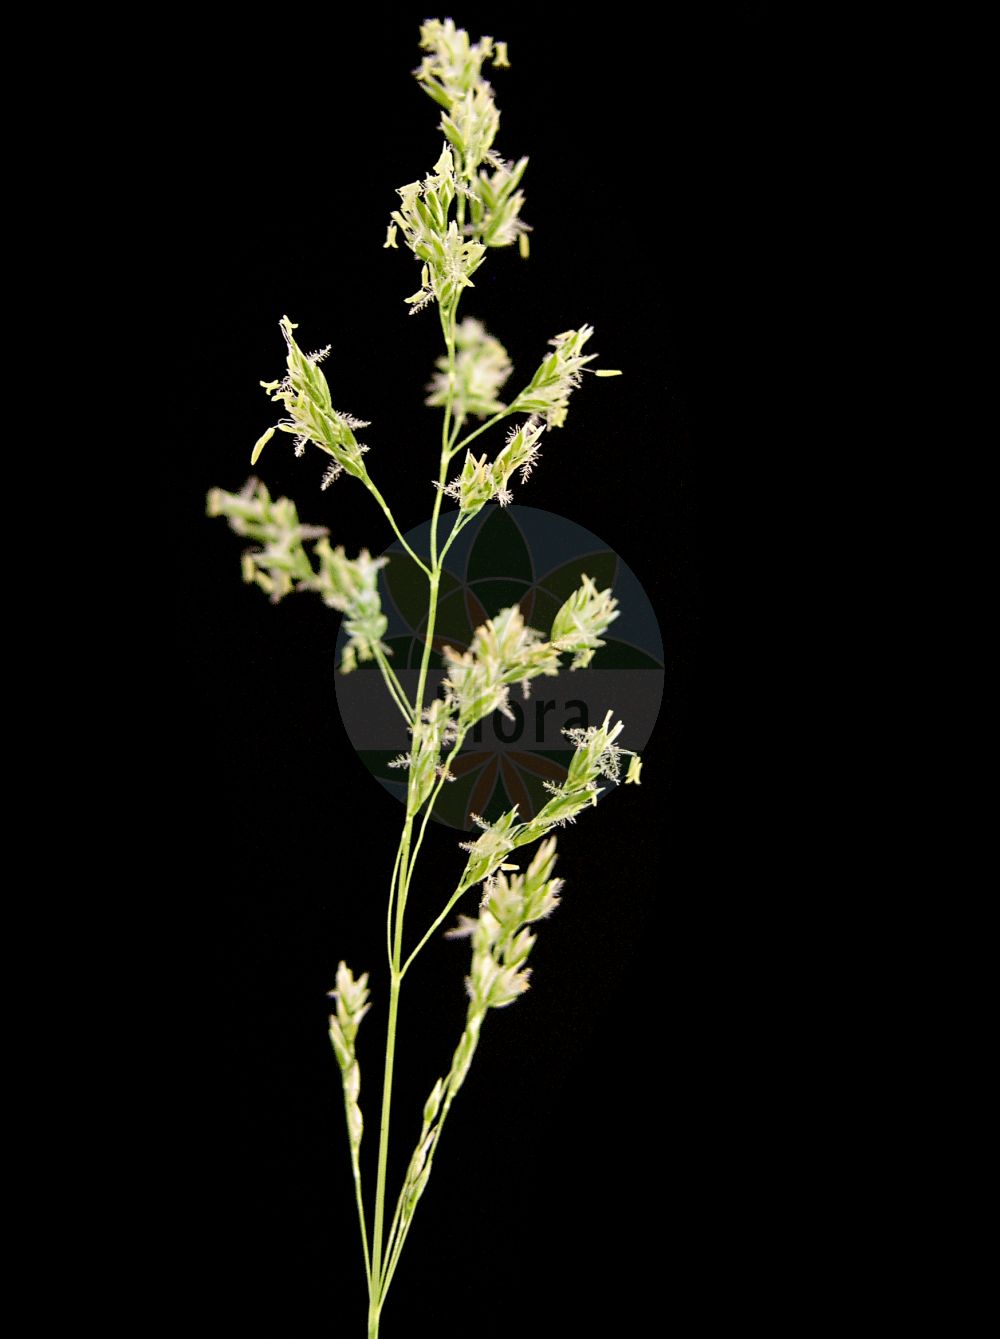 Foto von Poa angustifolia (Schmalblättriges Wiesen-Rispengras - Narrow-leaved Meadow-Grass). ---- Photo of Poa angustifolia (Schmalblättriges Wiesen-Rispengras - Narrow-leaved Meadow-Grass).(Poa angustifolia,Schmalblättriges Wiesen-Rispengras,Narrow-leaved Meadow-Grass,Poa angustifolia,Poa capillifolia,Poa pratensis subsp. atlantis,Schmalblaettriges Wiesen-Rispengras,Narrow-leaved Meadow-Grass,Poa,Rispengras,Bluegrass,Poaceae,Süßgräser,Grass family)